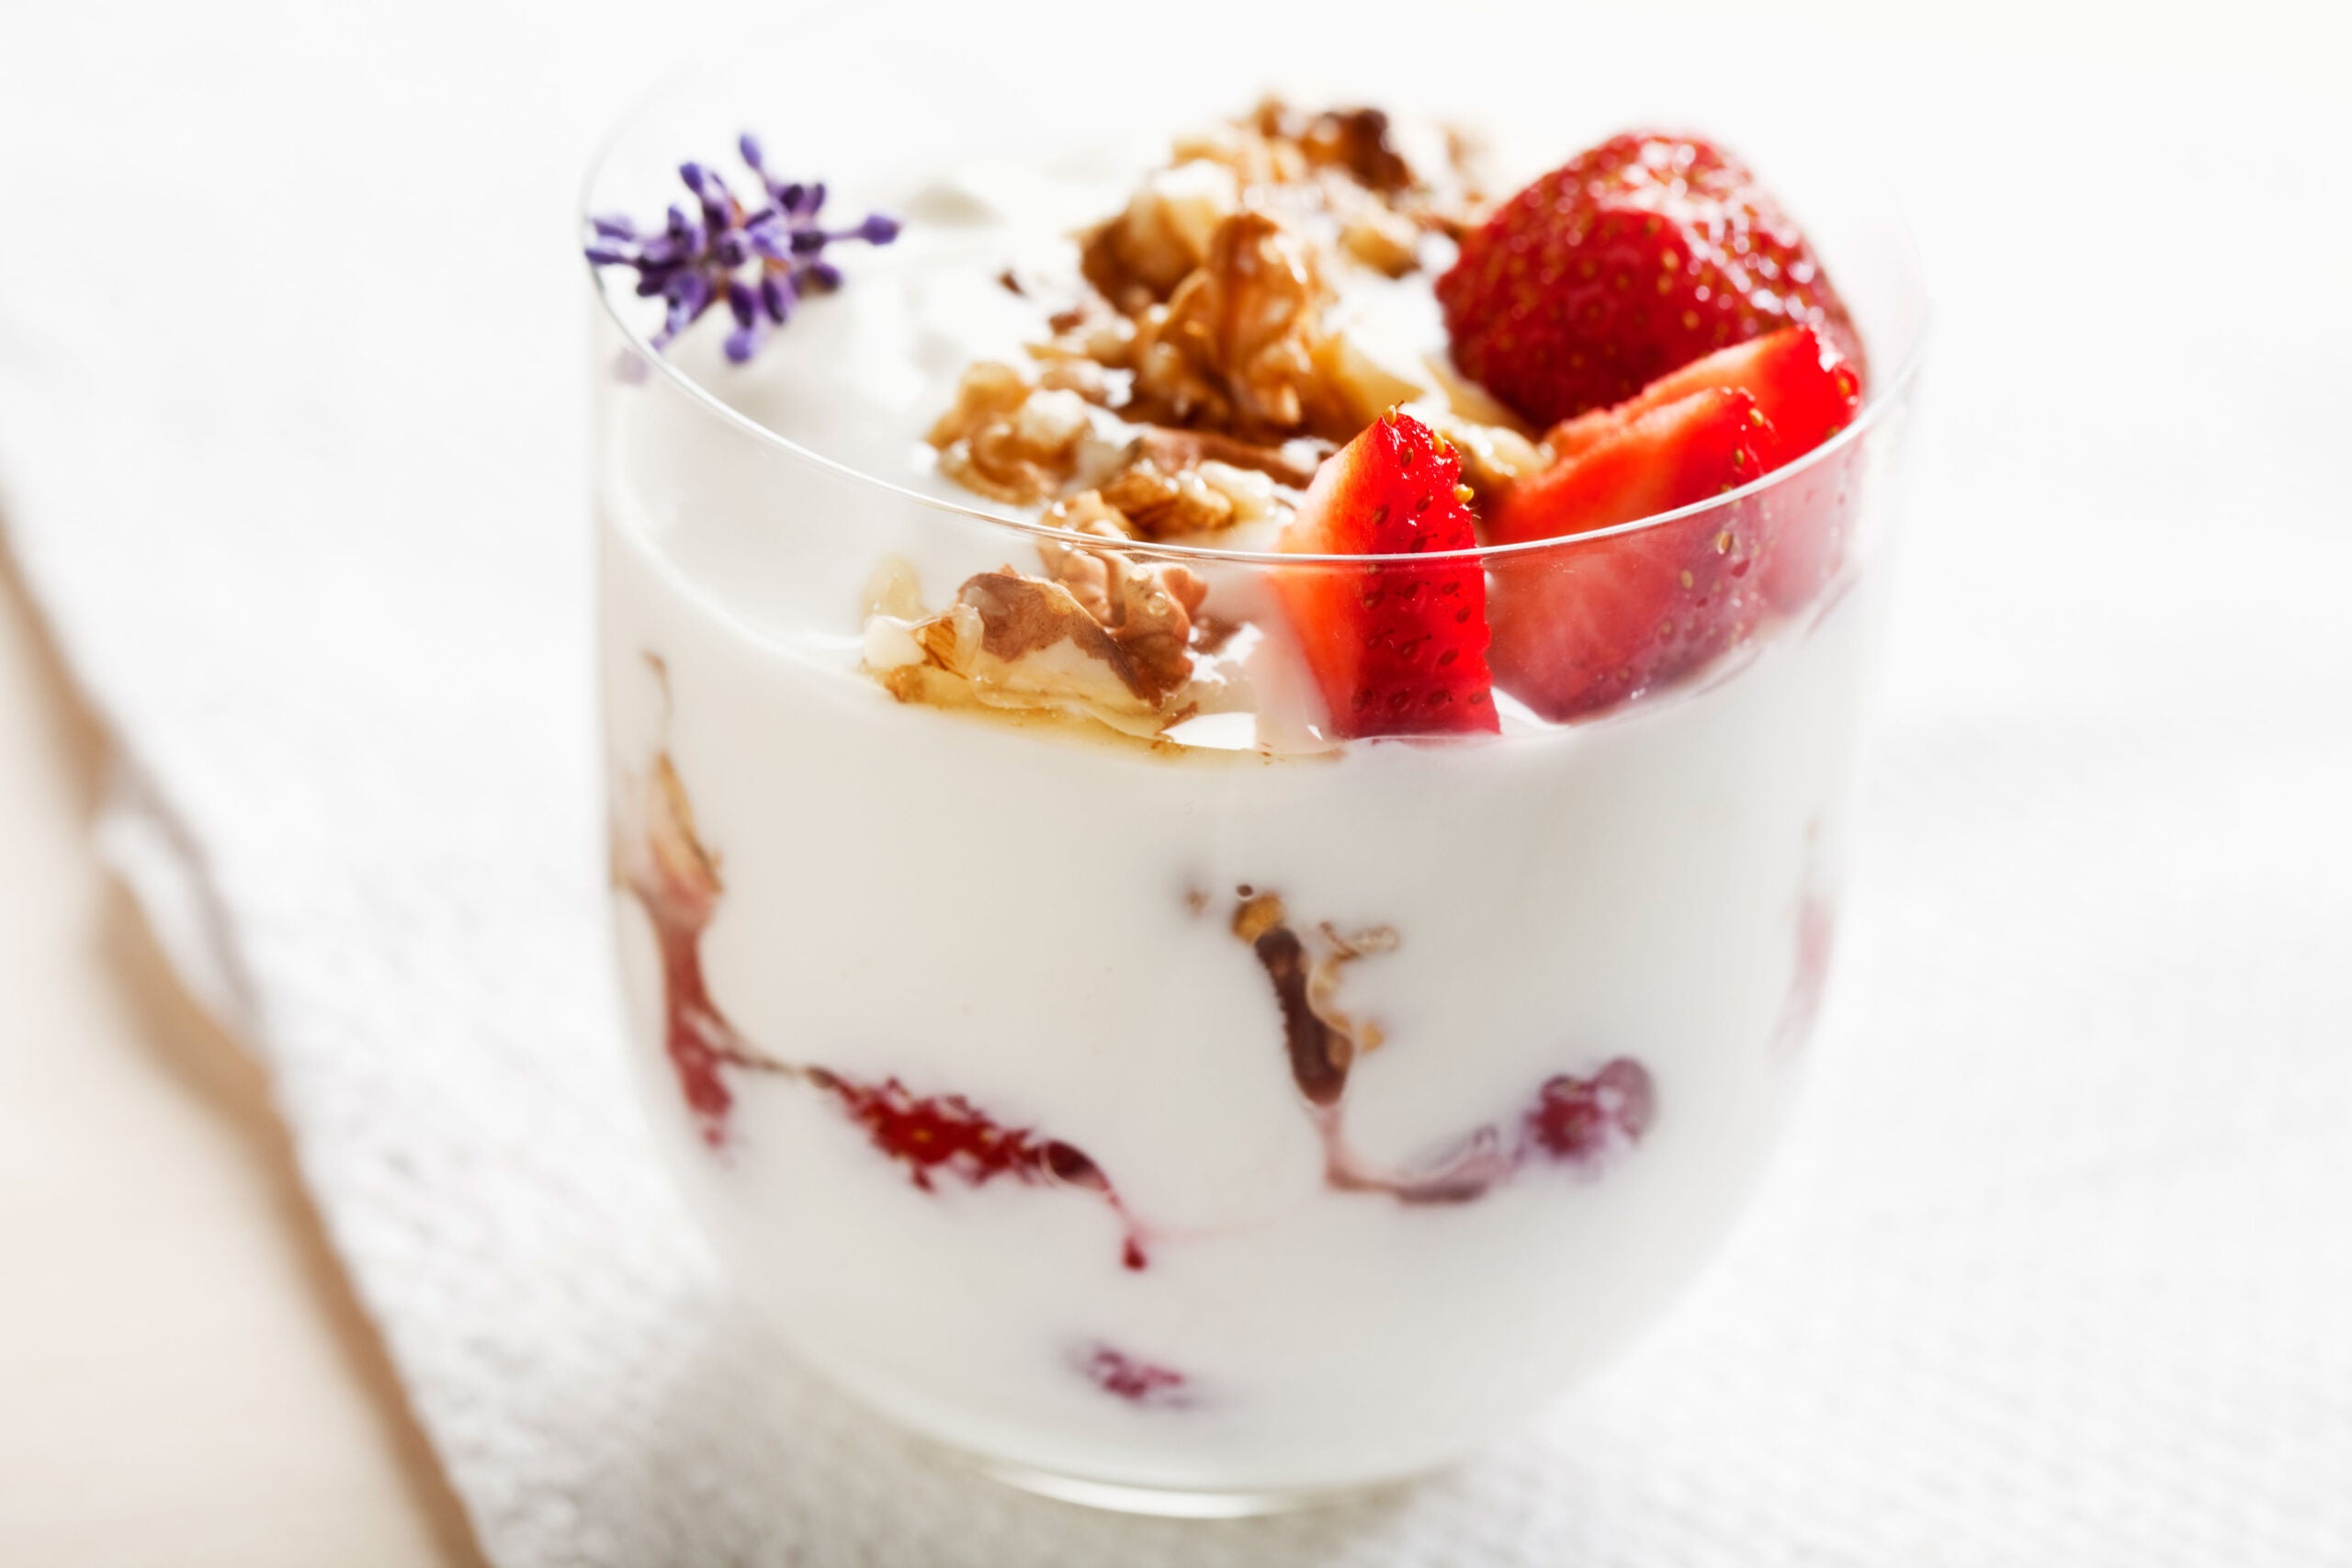 https://www.saveur.com/uploads/2022/06/07/00-Best-yogurt-makers-saveur-scaled.jpg?auto=webp